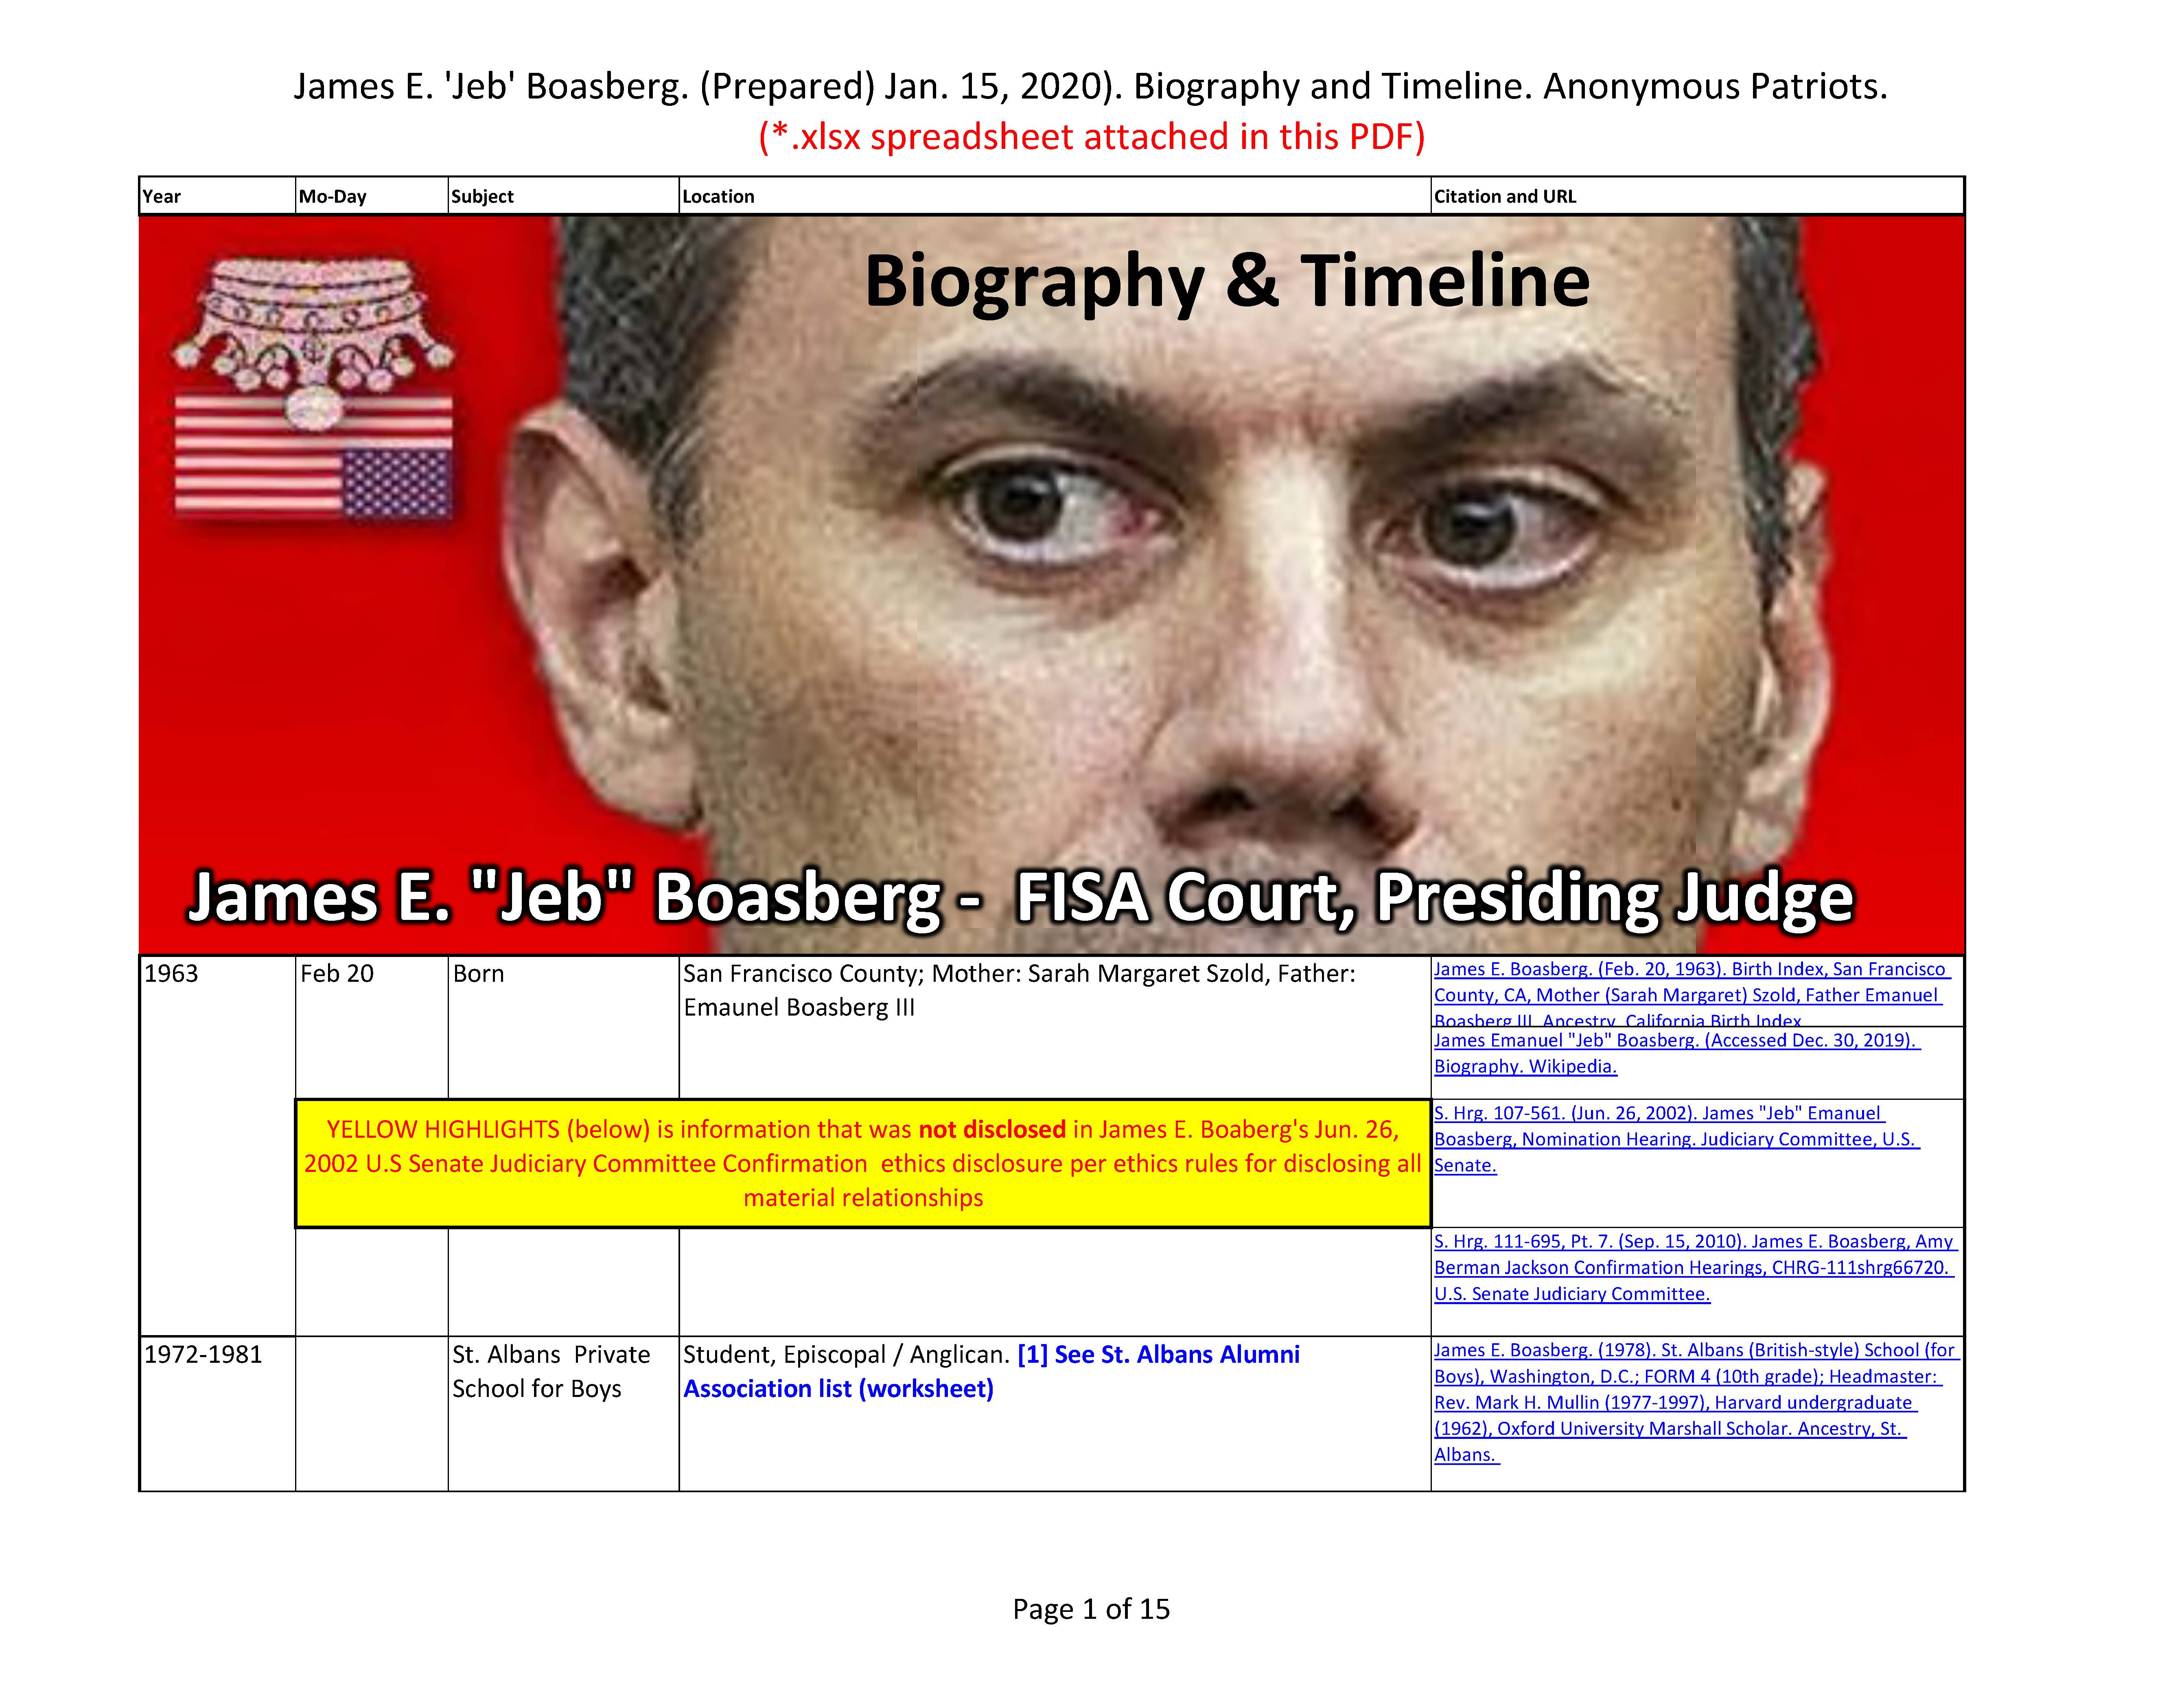 James E. 'Jeb' Boasberg. (Prepared Jan. 14, 2020). Biography & Timeline. Anonymous Patriots.